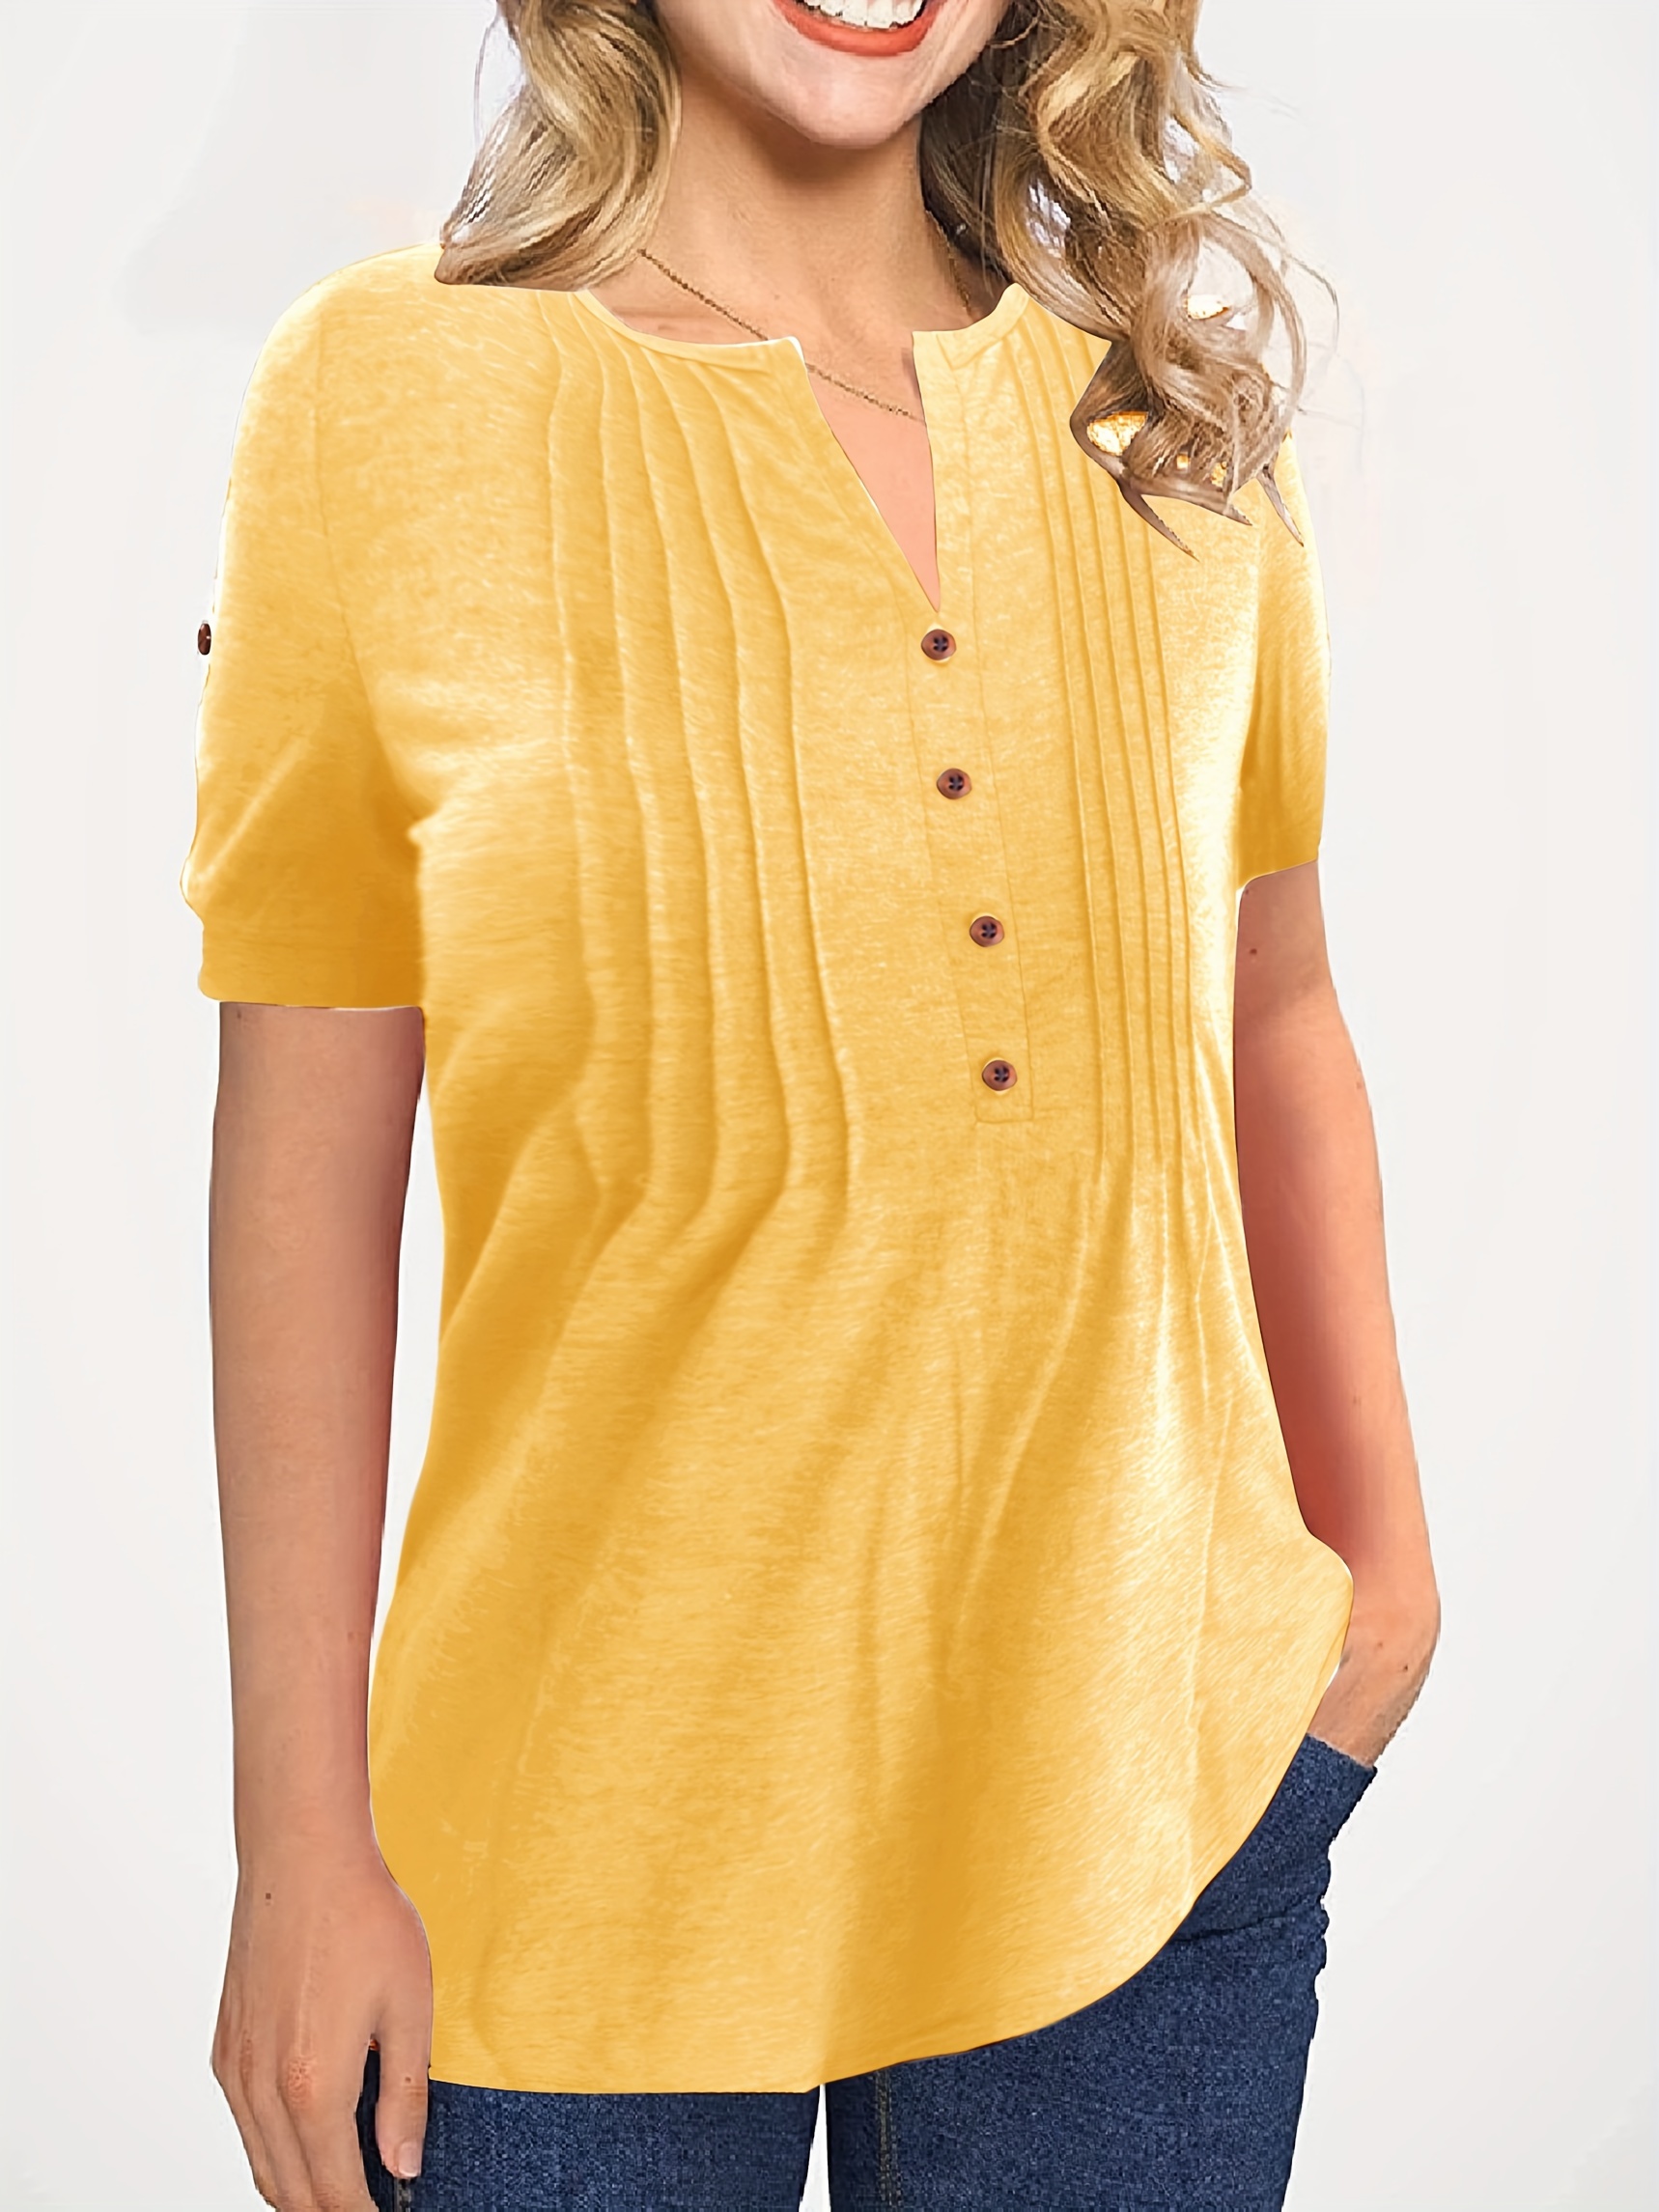 NGTEVOOS Women'S Tshirt Fashion Short Sleeve Turndown Collar Button Casual  Elastic Comfy Blouse Shirts